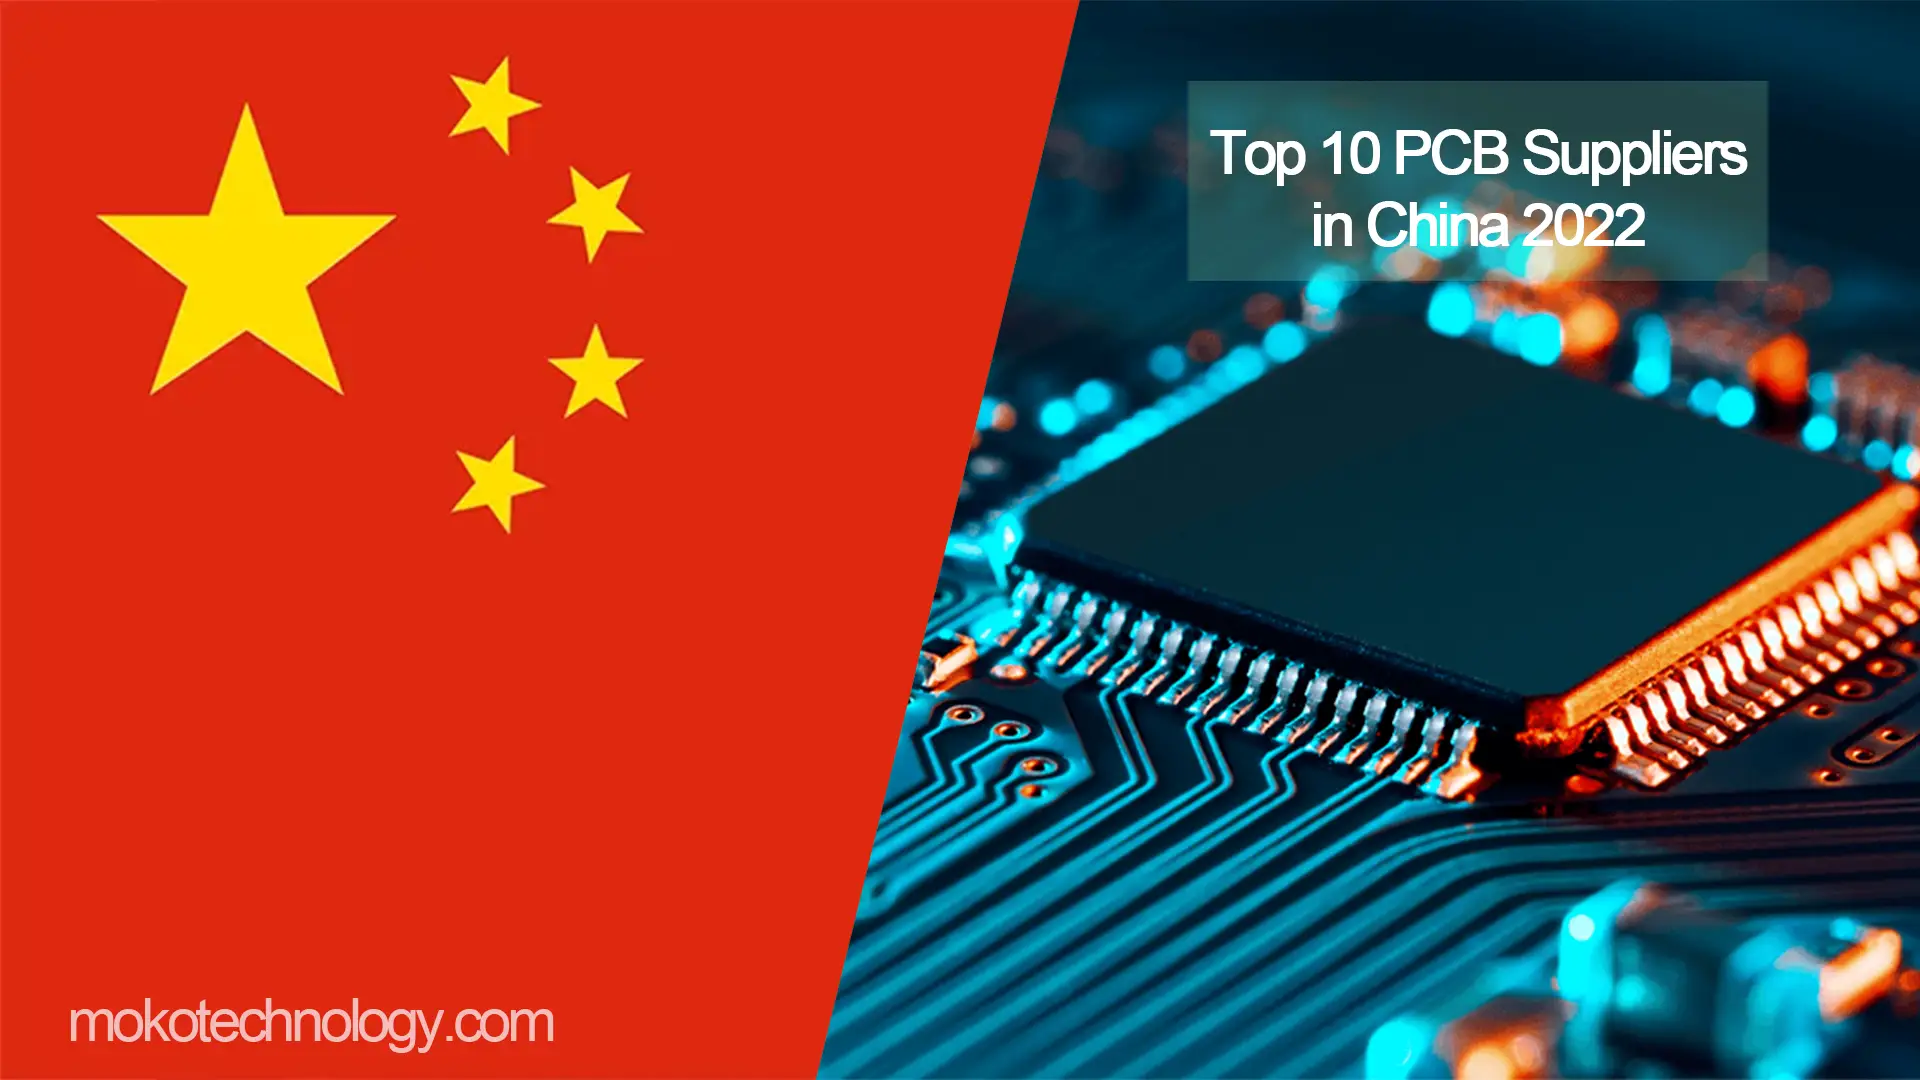 PCB-leverandører i Kina